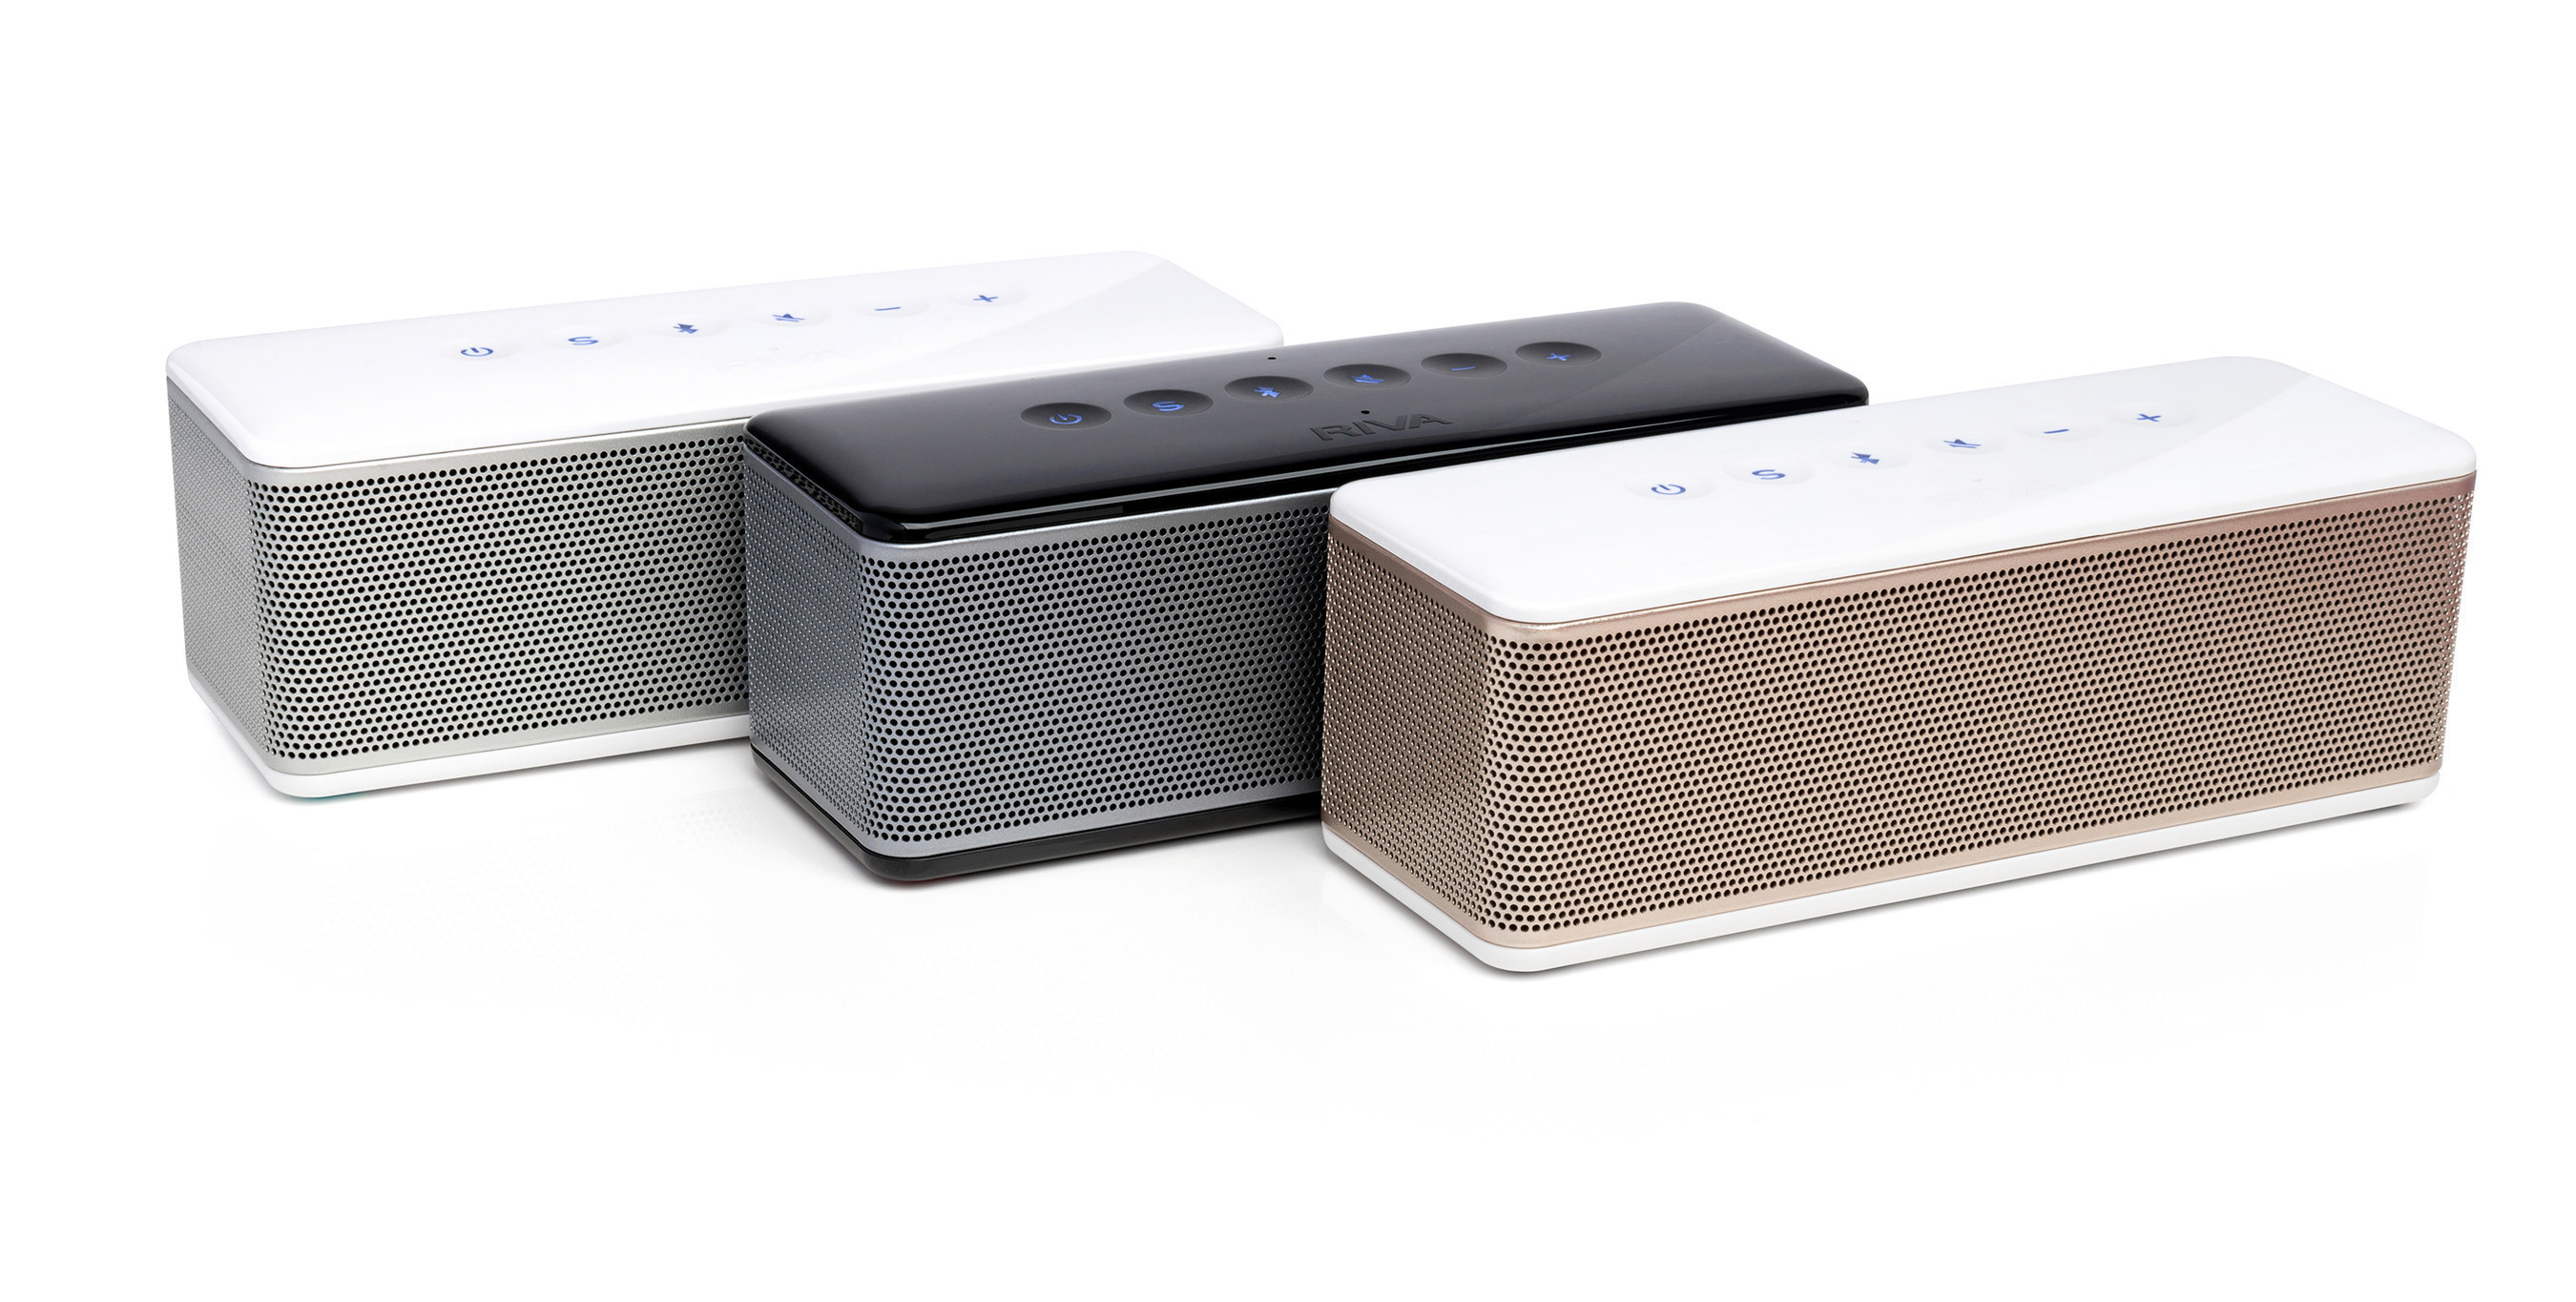 RIVA Audio, Designed to Amaze, introduces the RIVA S award-winning Bluetooth speaker